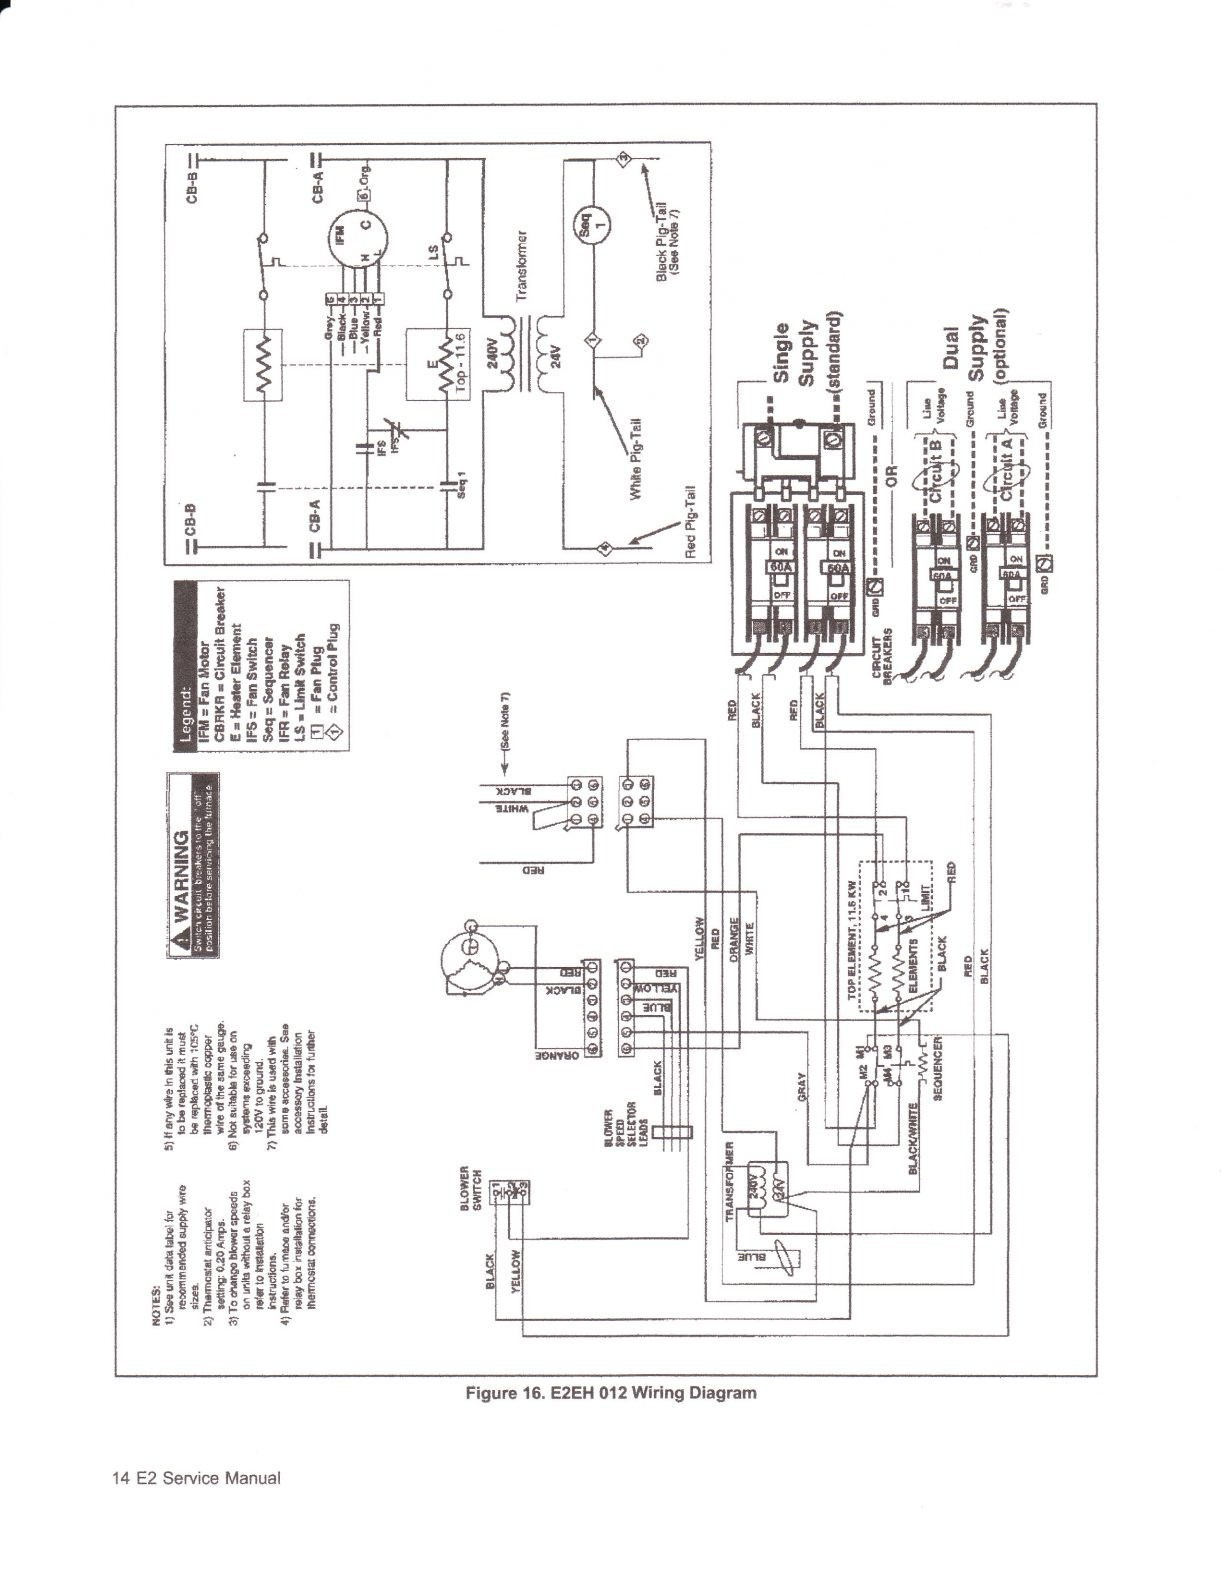 Heat Sequencer Wiring Diagram Lovely Goodman Electric Furnace 12 1 - Heat Sequencer Wiring Diagram